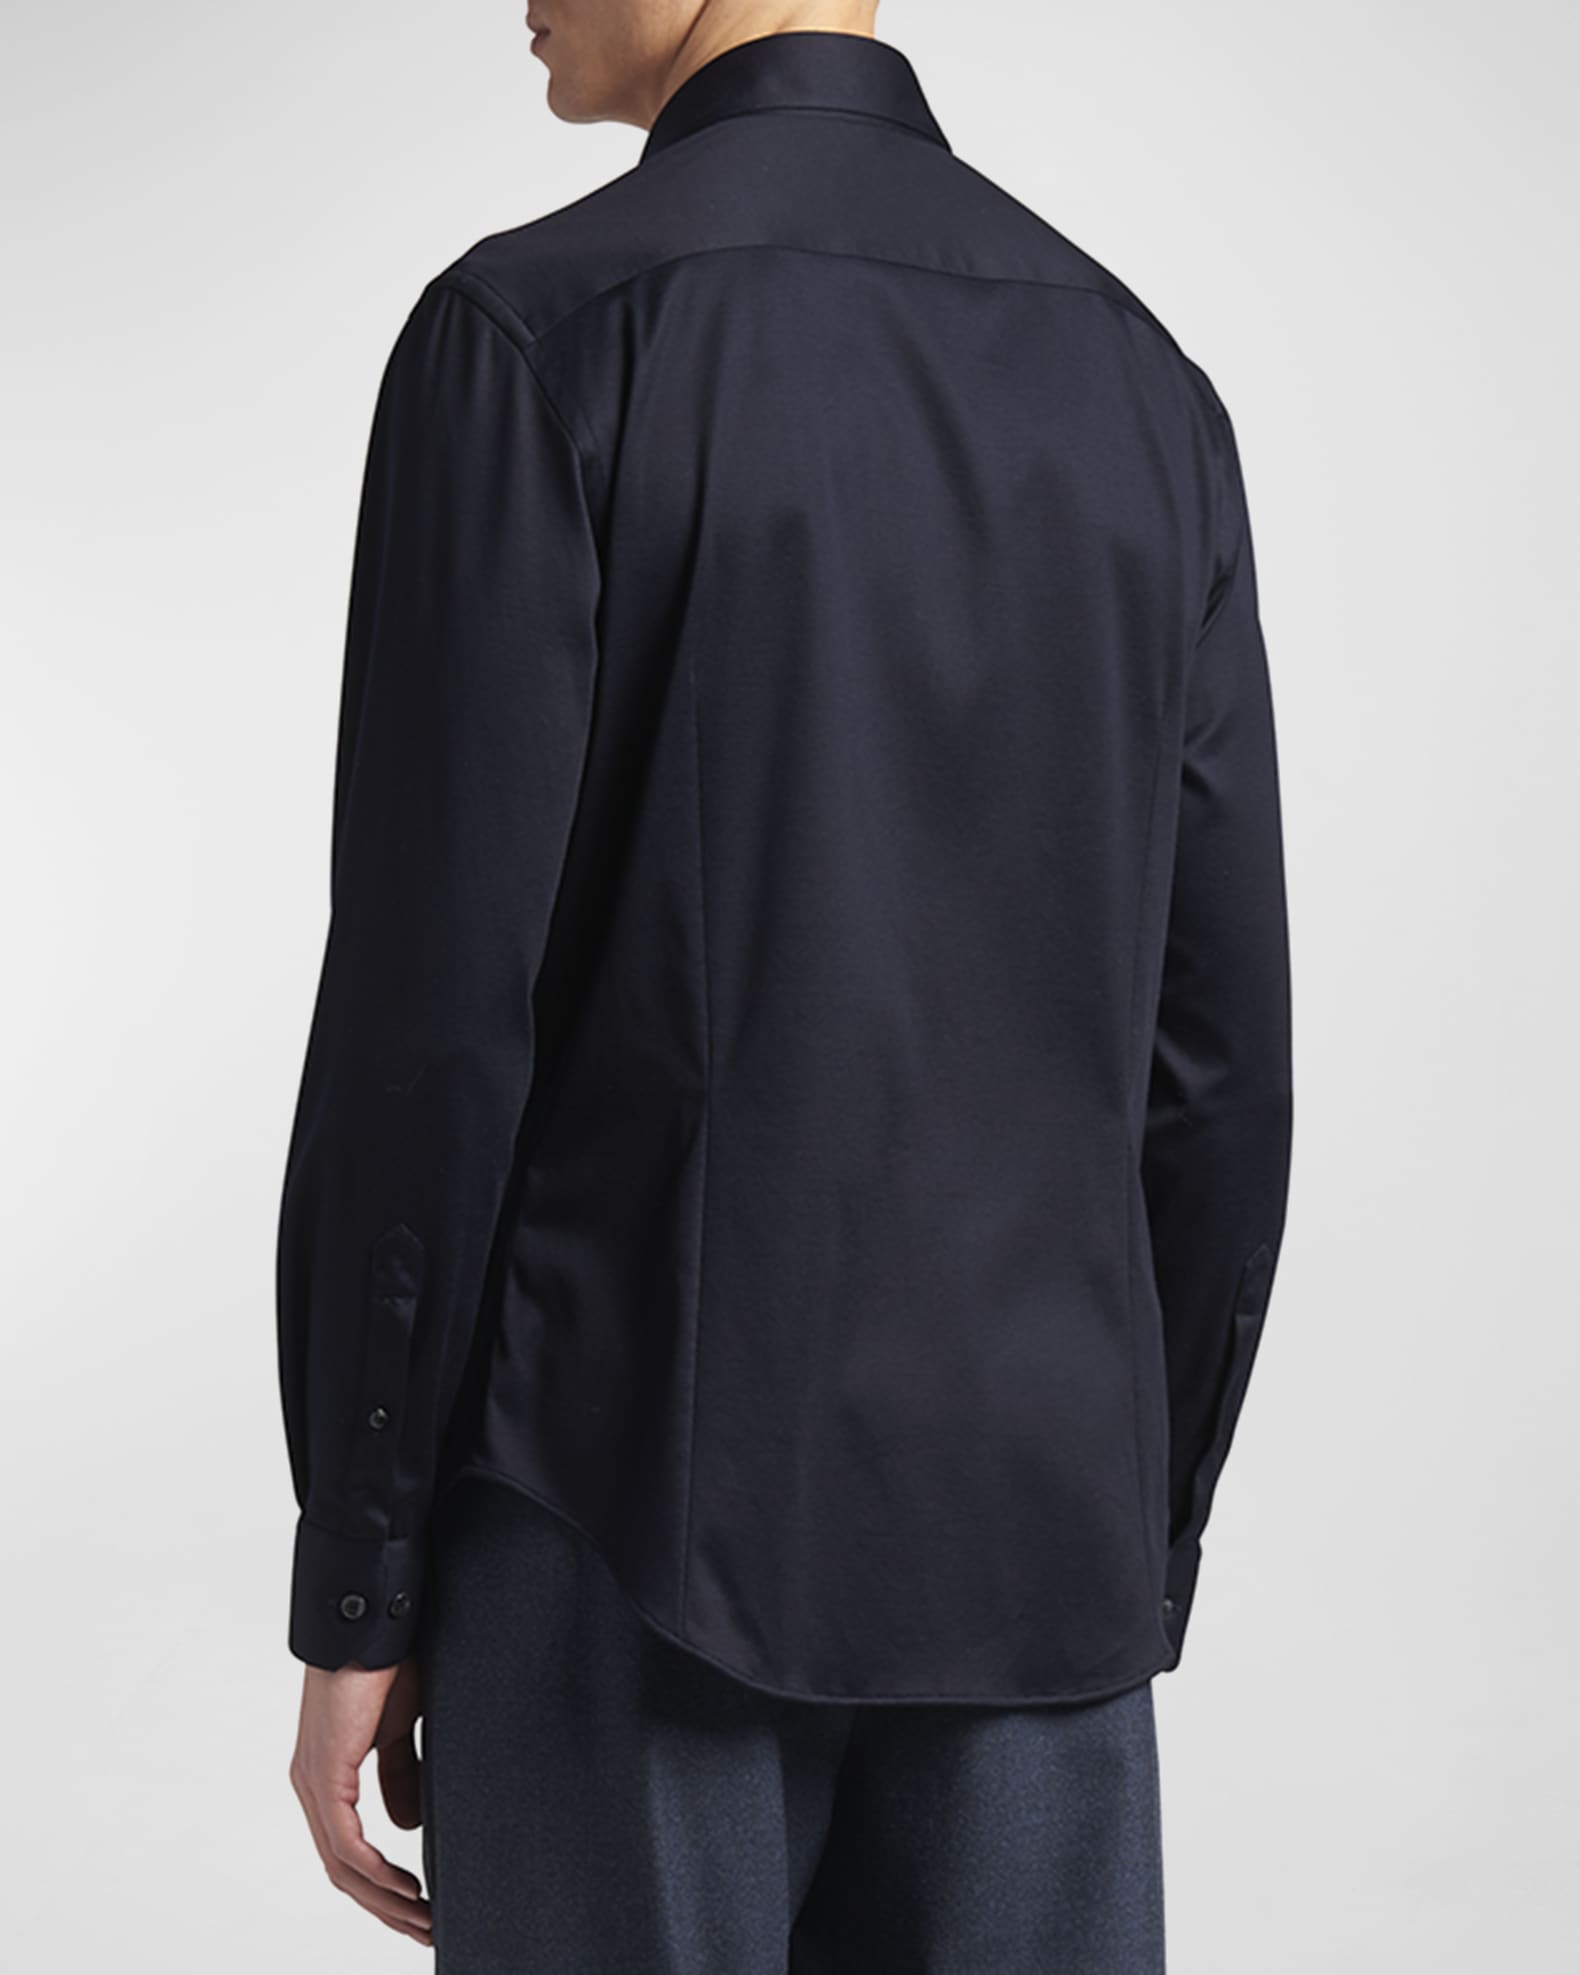 Giorgio Armani Men's Stretch Jersey Sport Shirt, Navy | Neiman Marcus